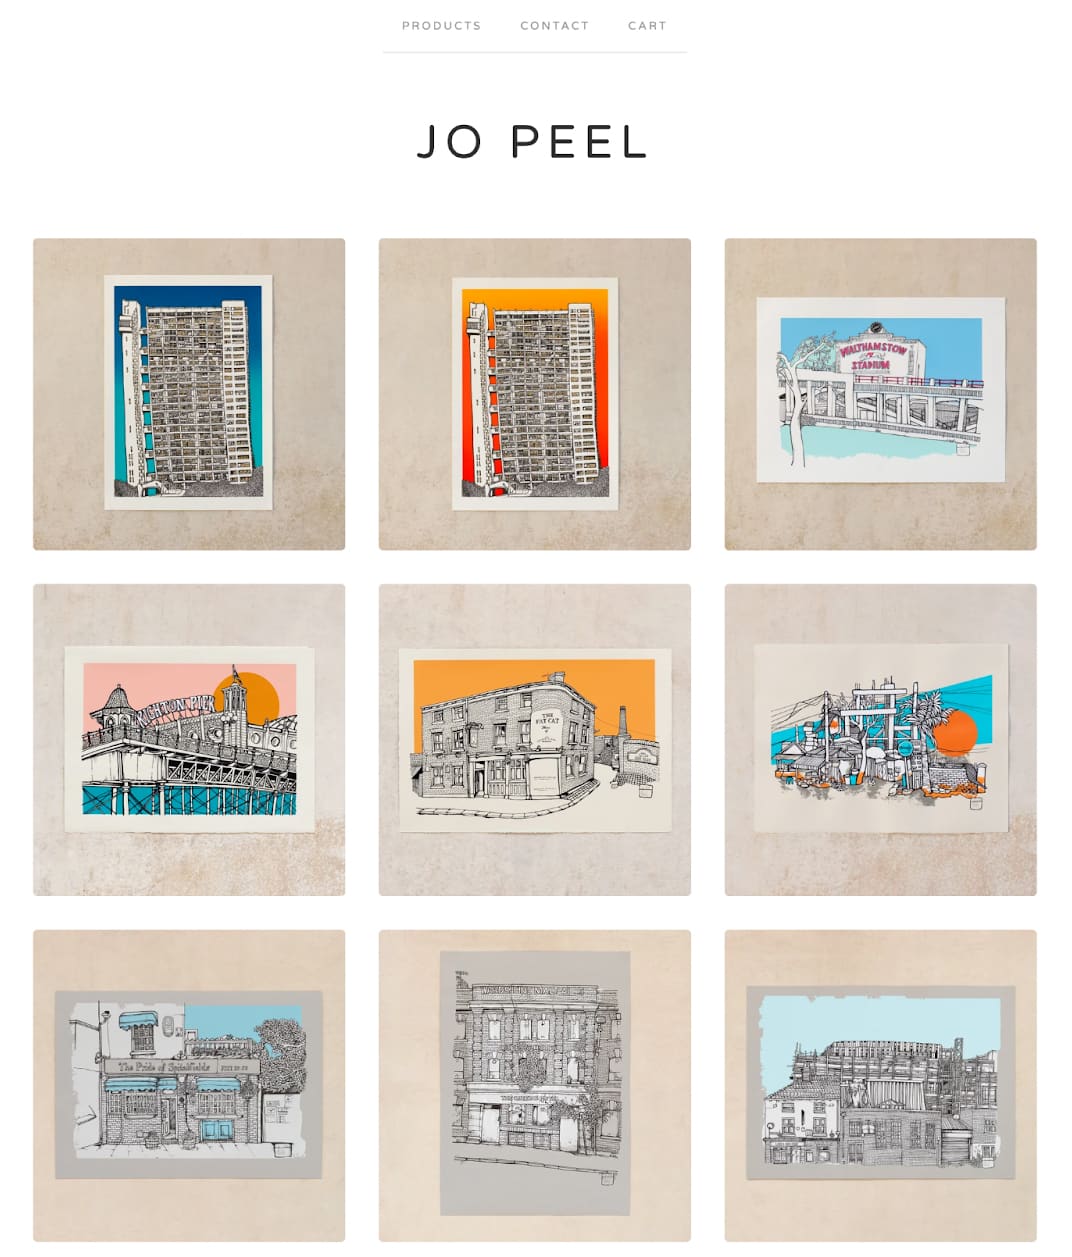 Big Cartel's Jo Peel sample website.